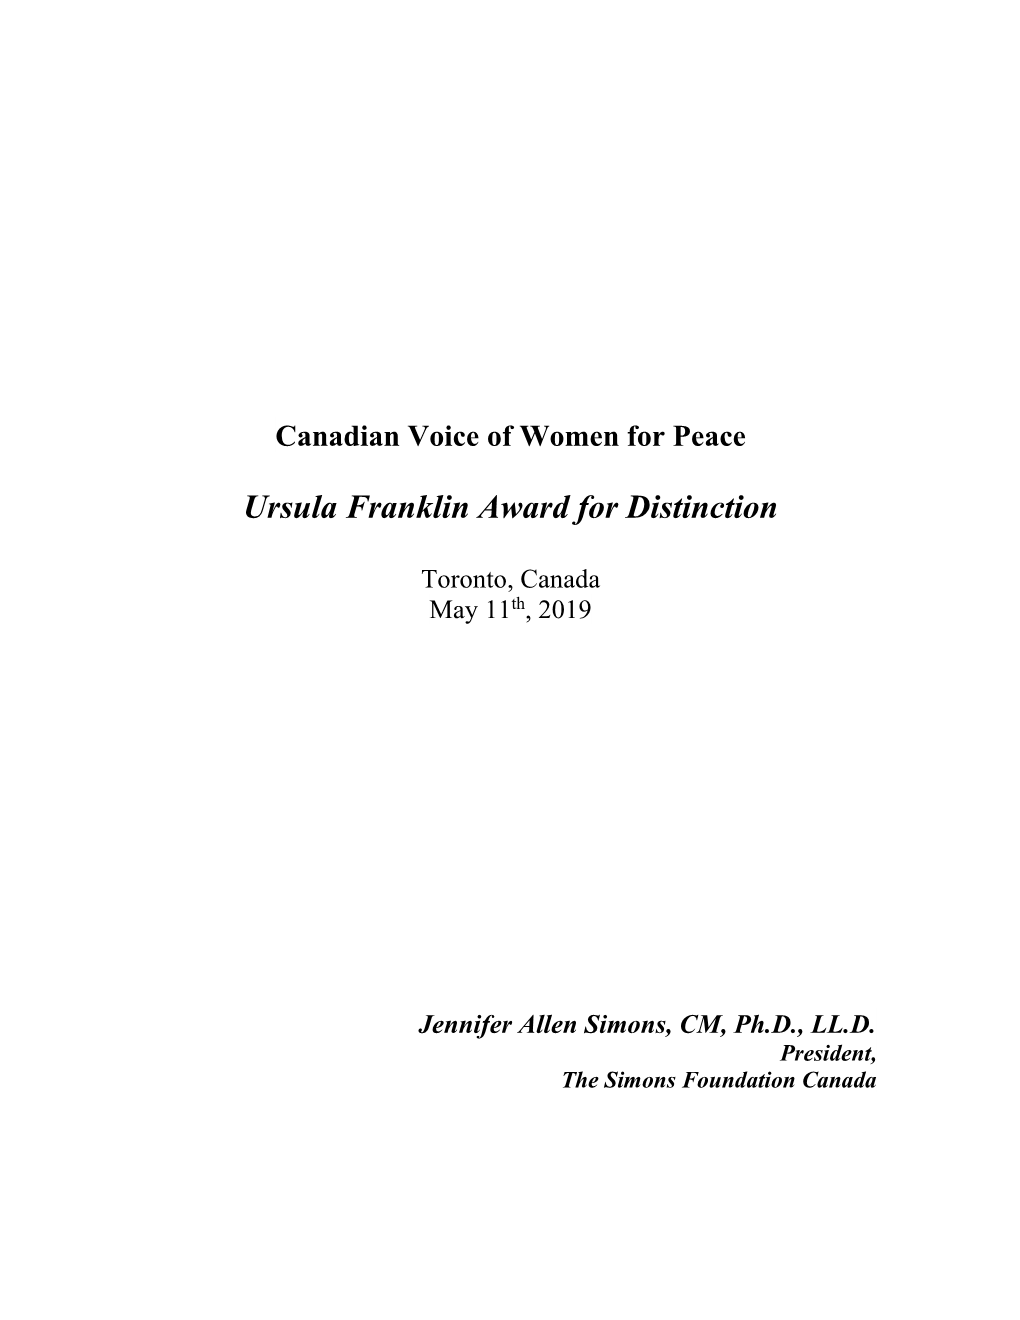 Ursula Franklin Award for Distinction